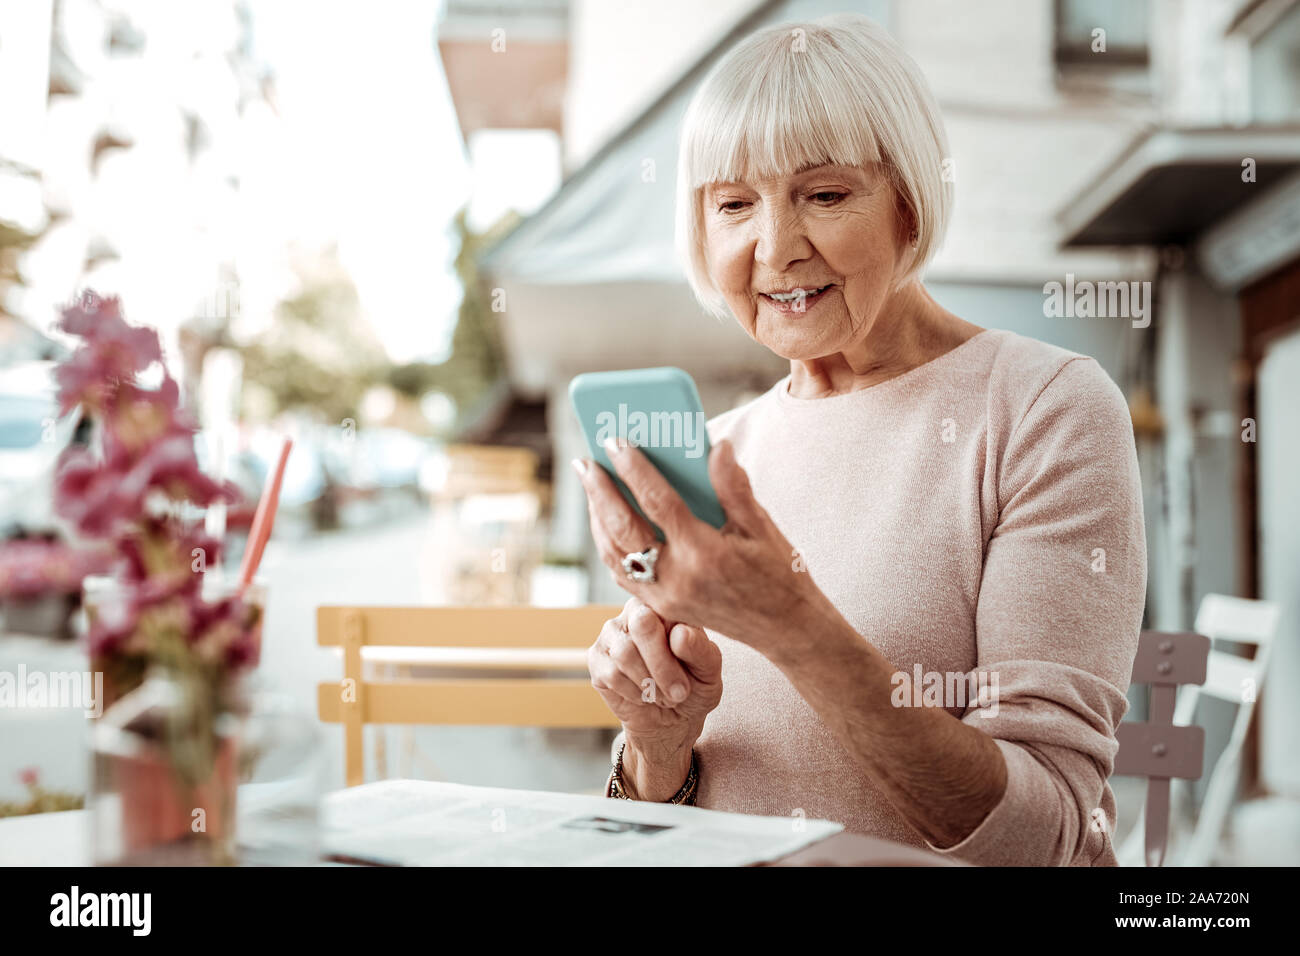 Nice elderly woman looking at her smartphone screen Stock Photo